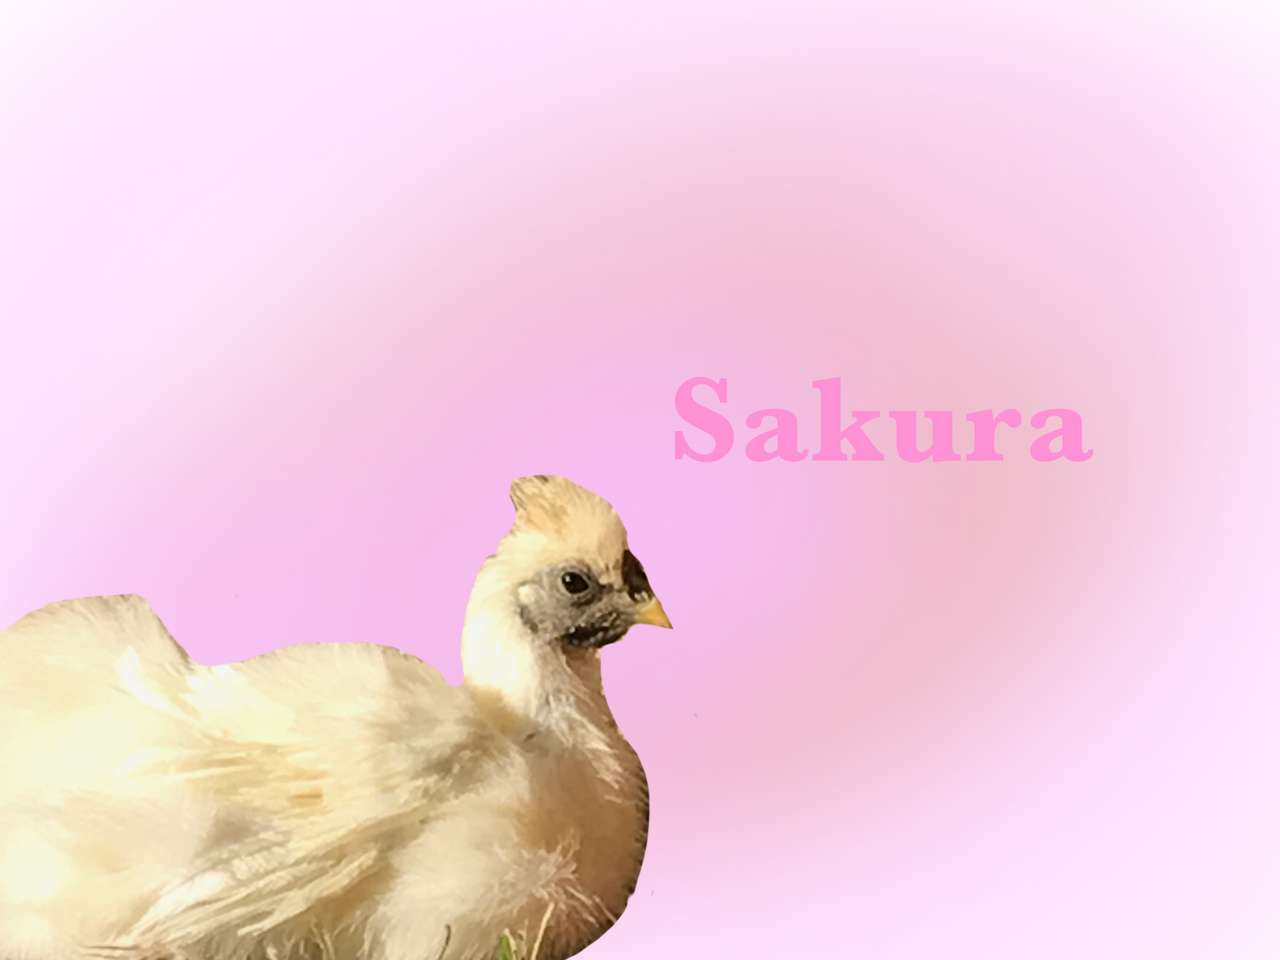 Pisklę kury Sakura puzzle online